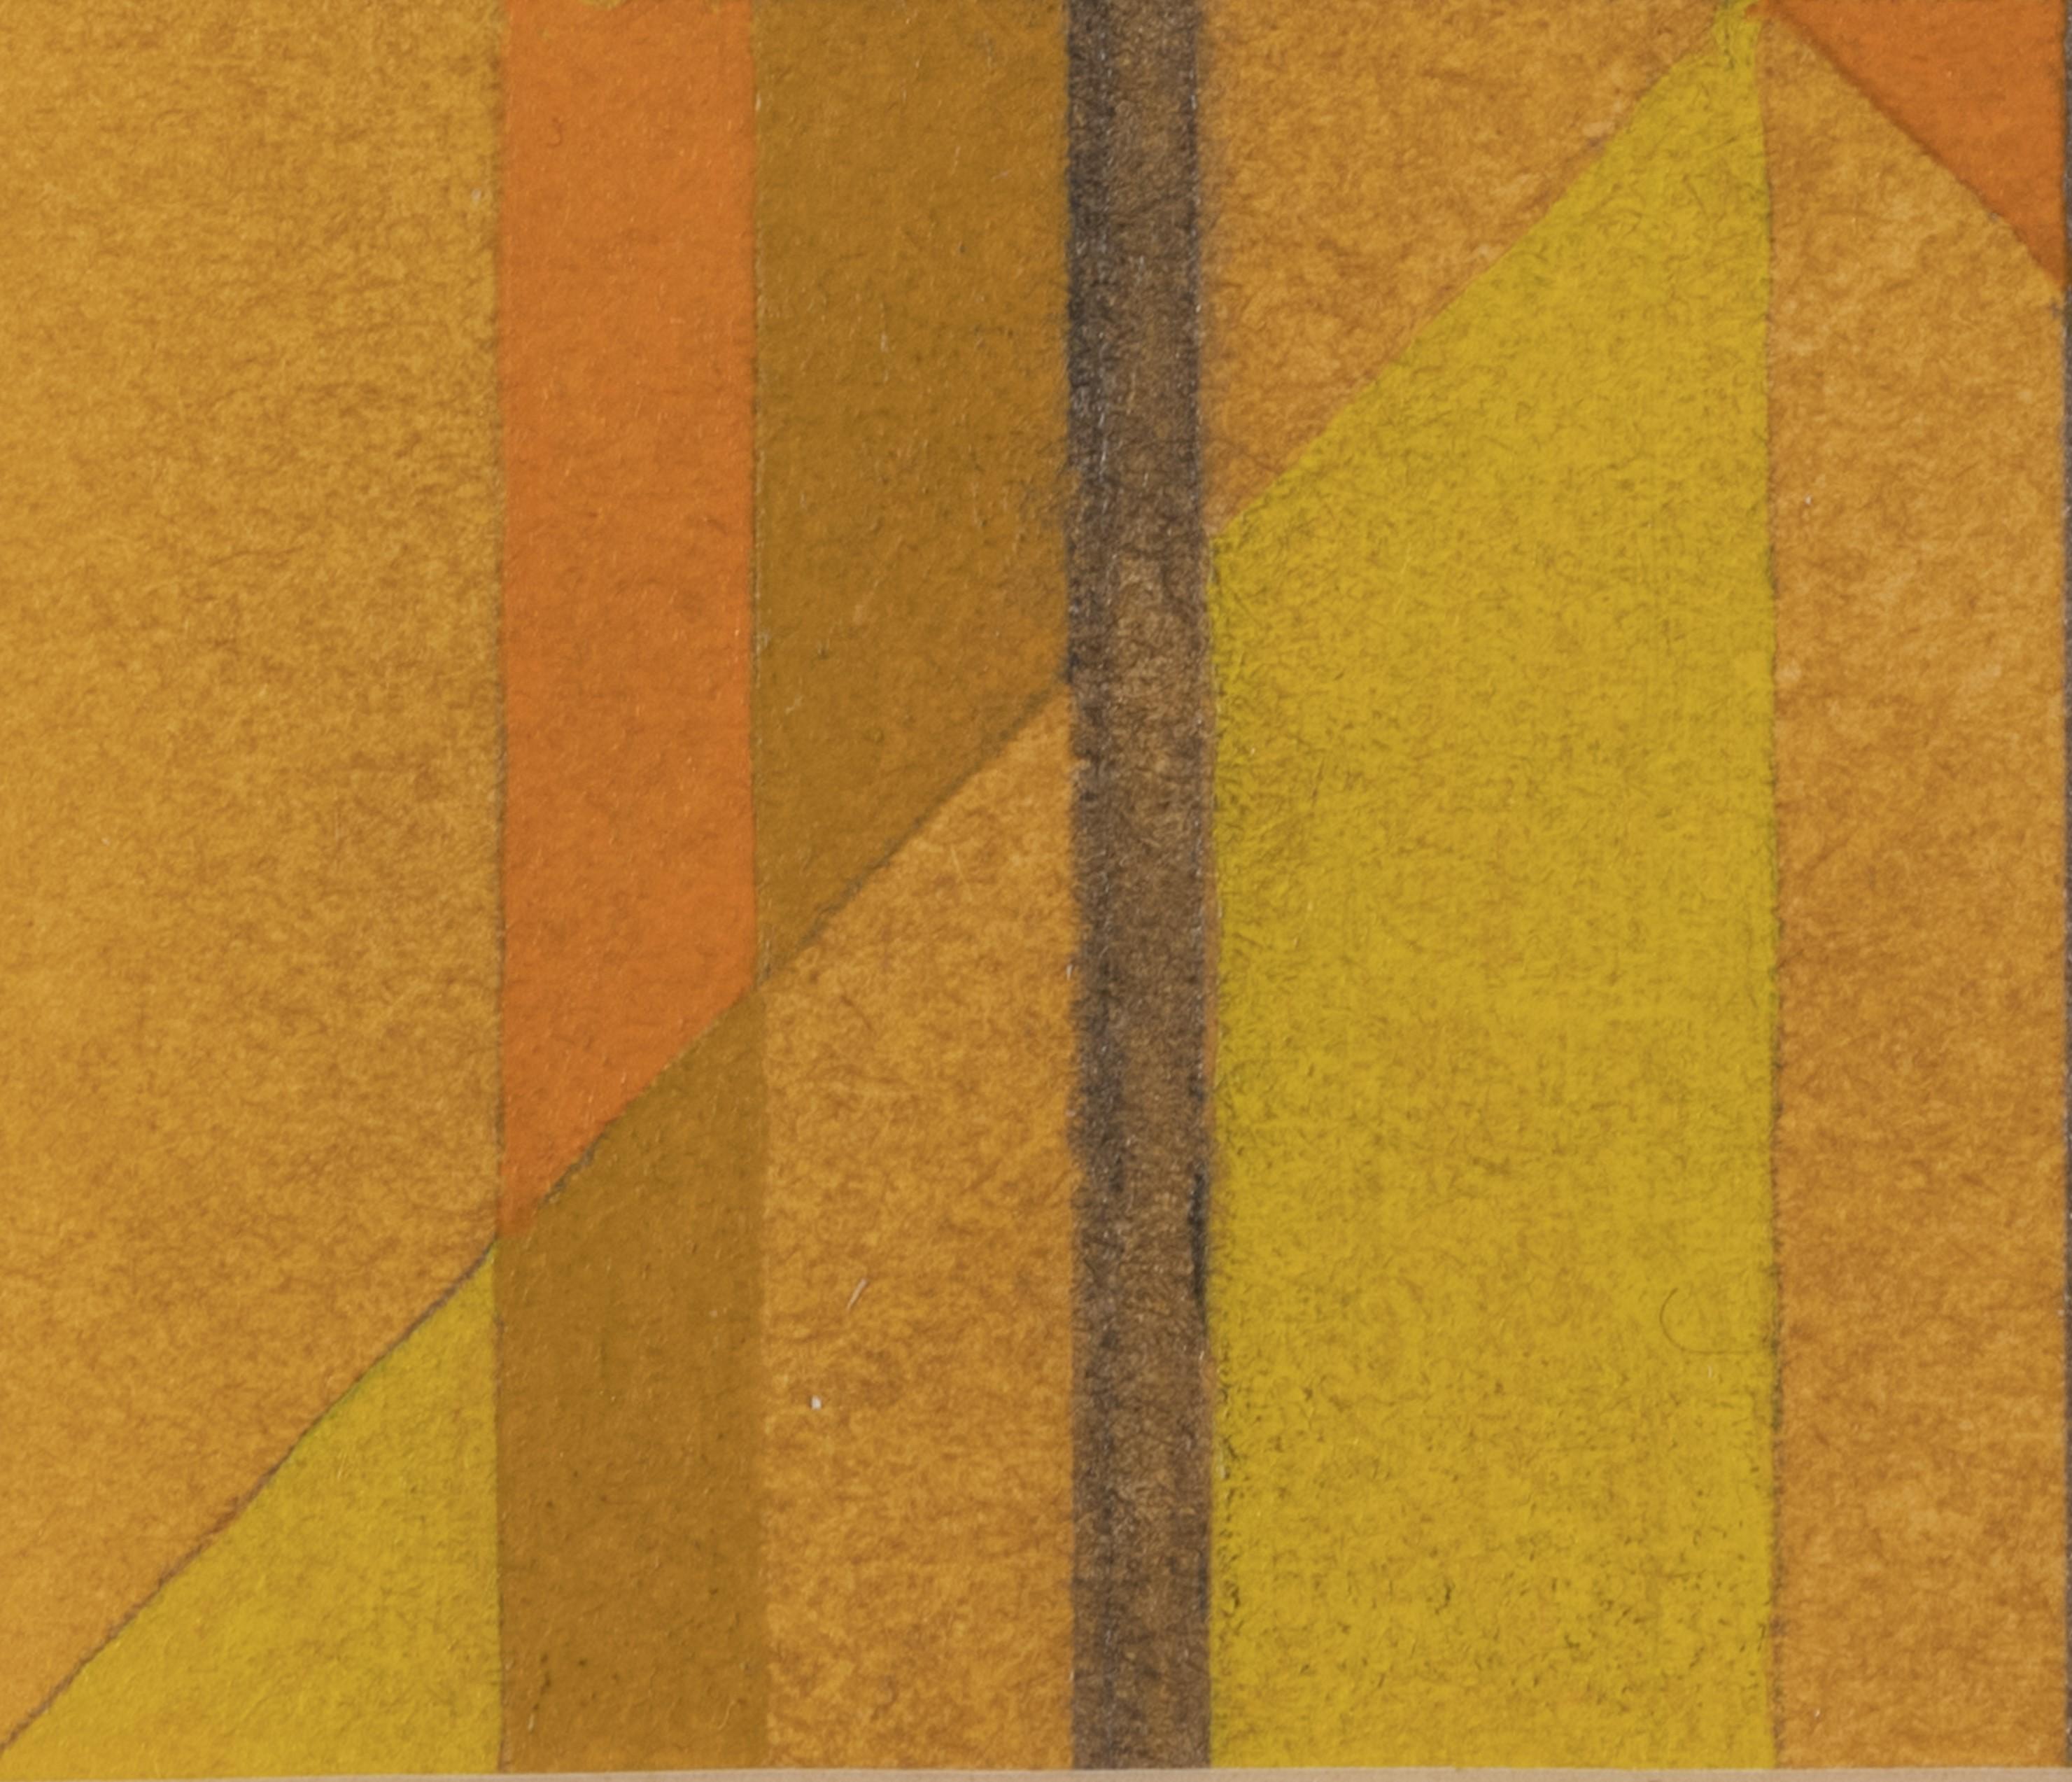 Variations on Verticals No 2 - Orange Abstract Painting by George Dannatt